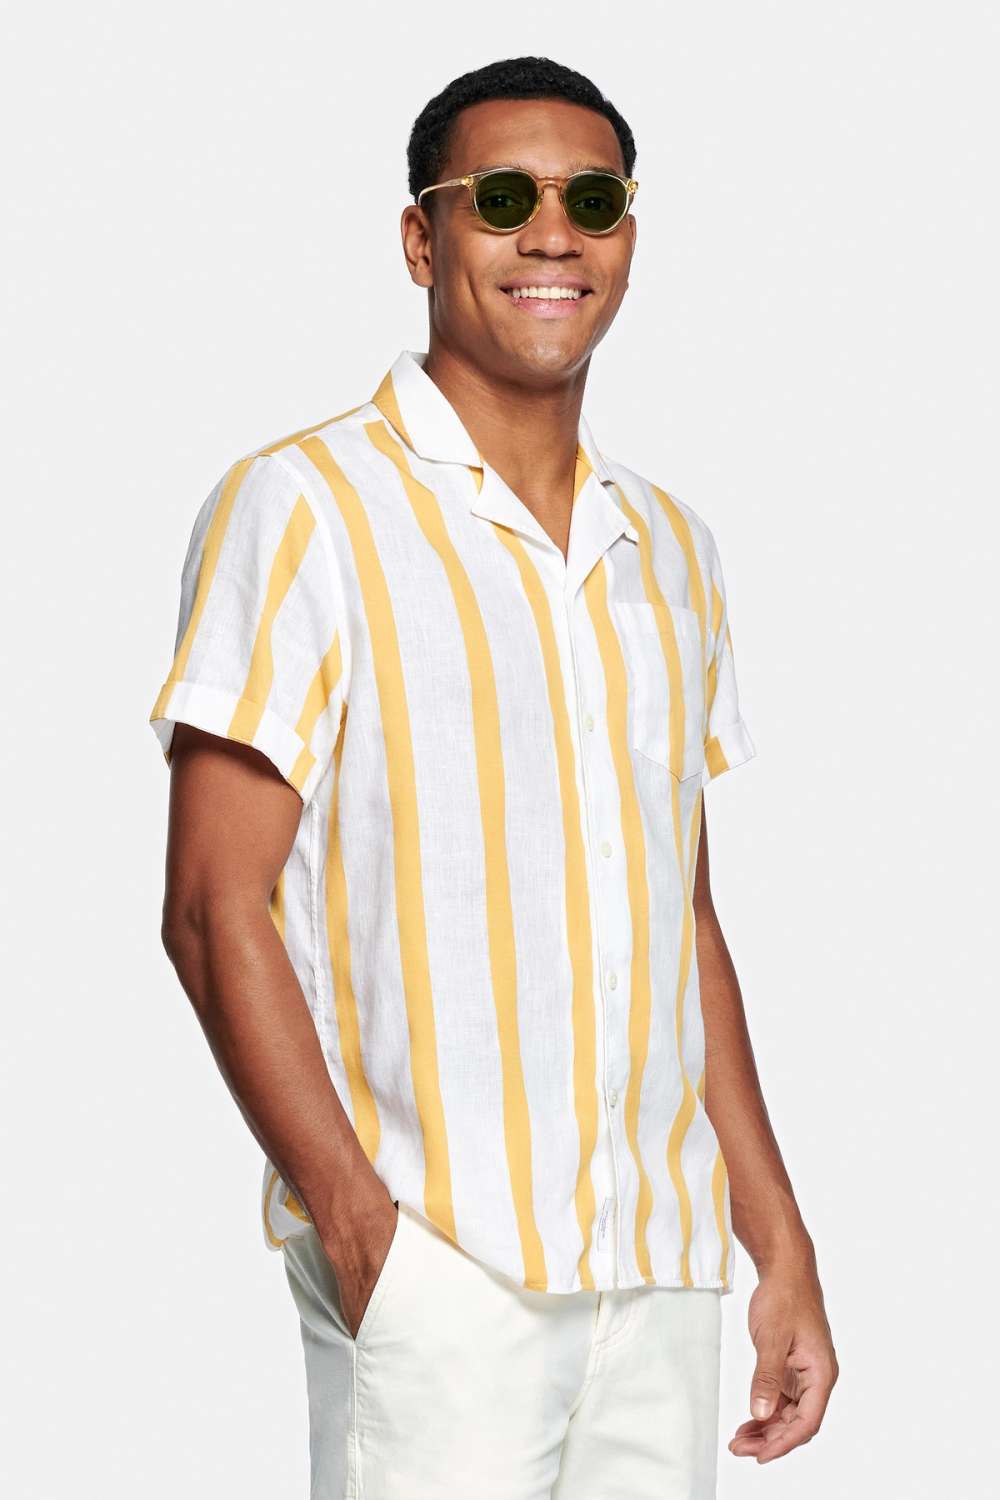 Giallo Stripes - The Summer Shirt